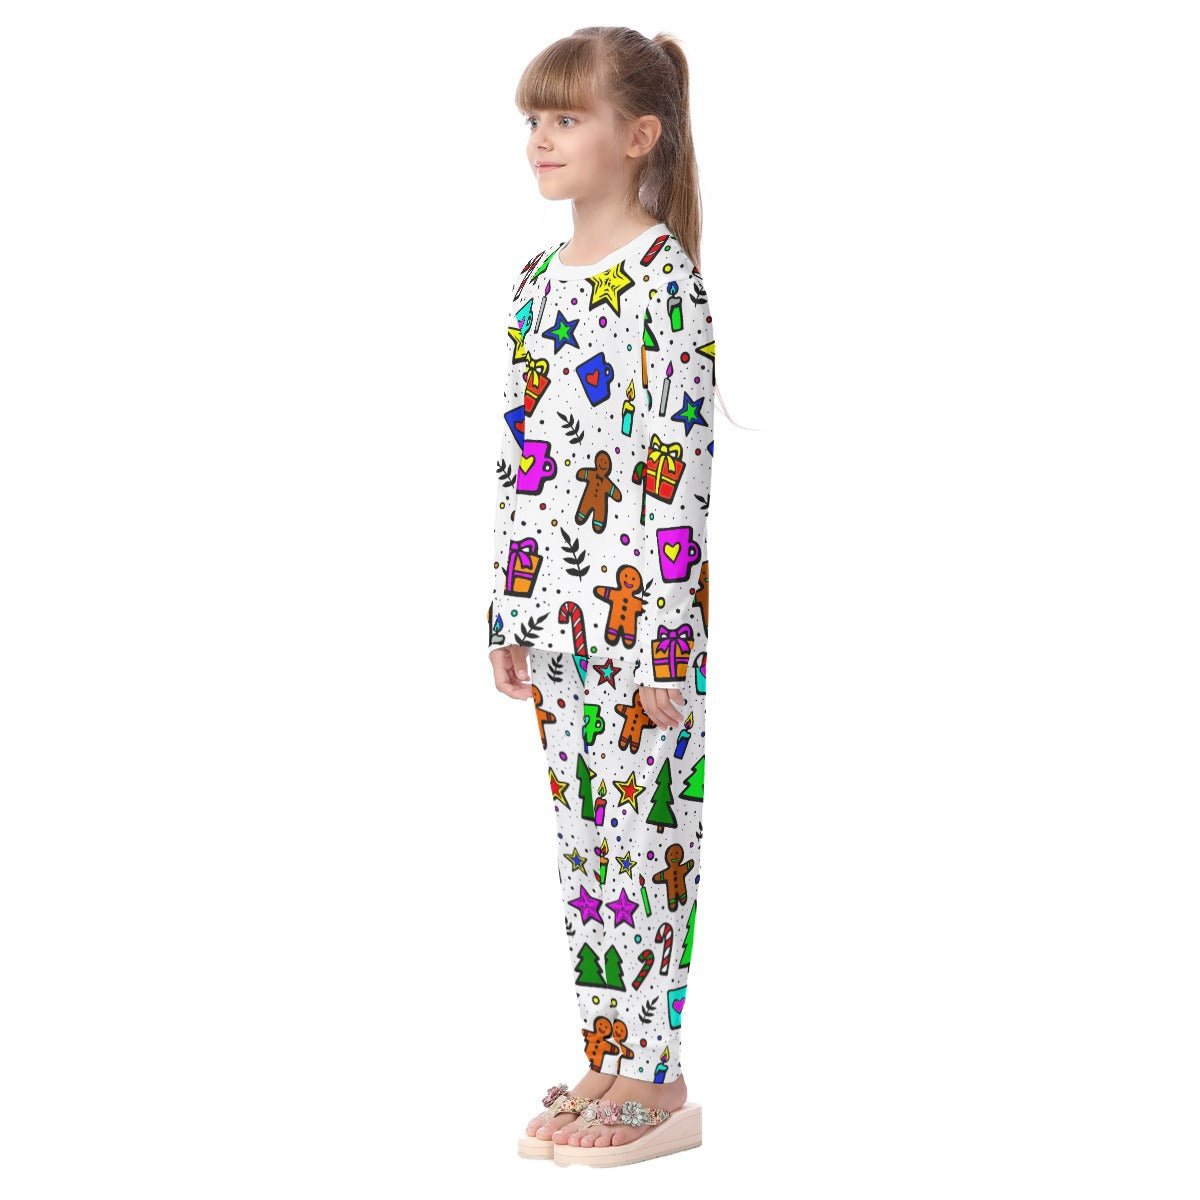 Kid's Christmas Pyjamas - Bright Doodle - Festive Style